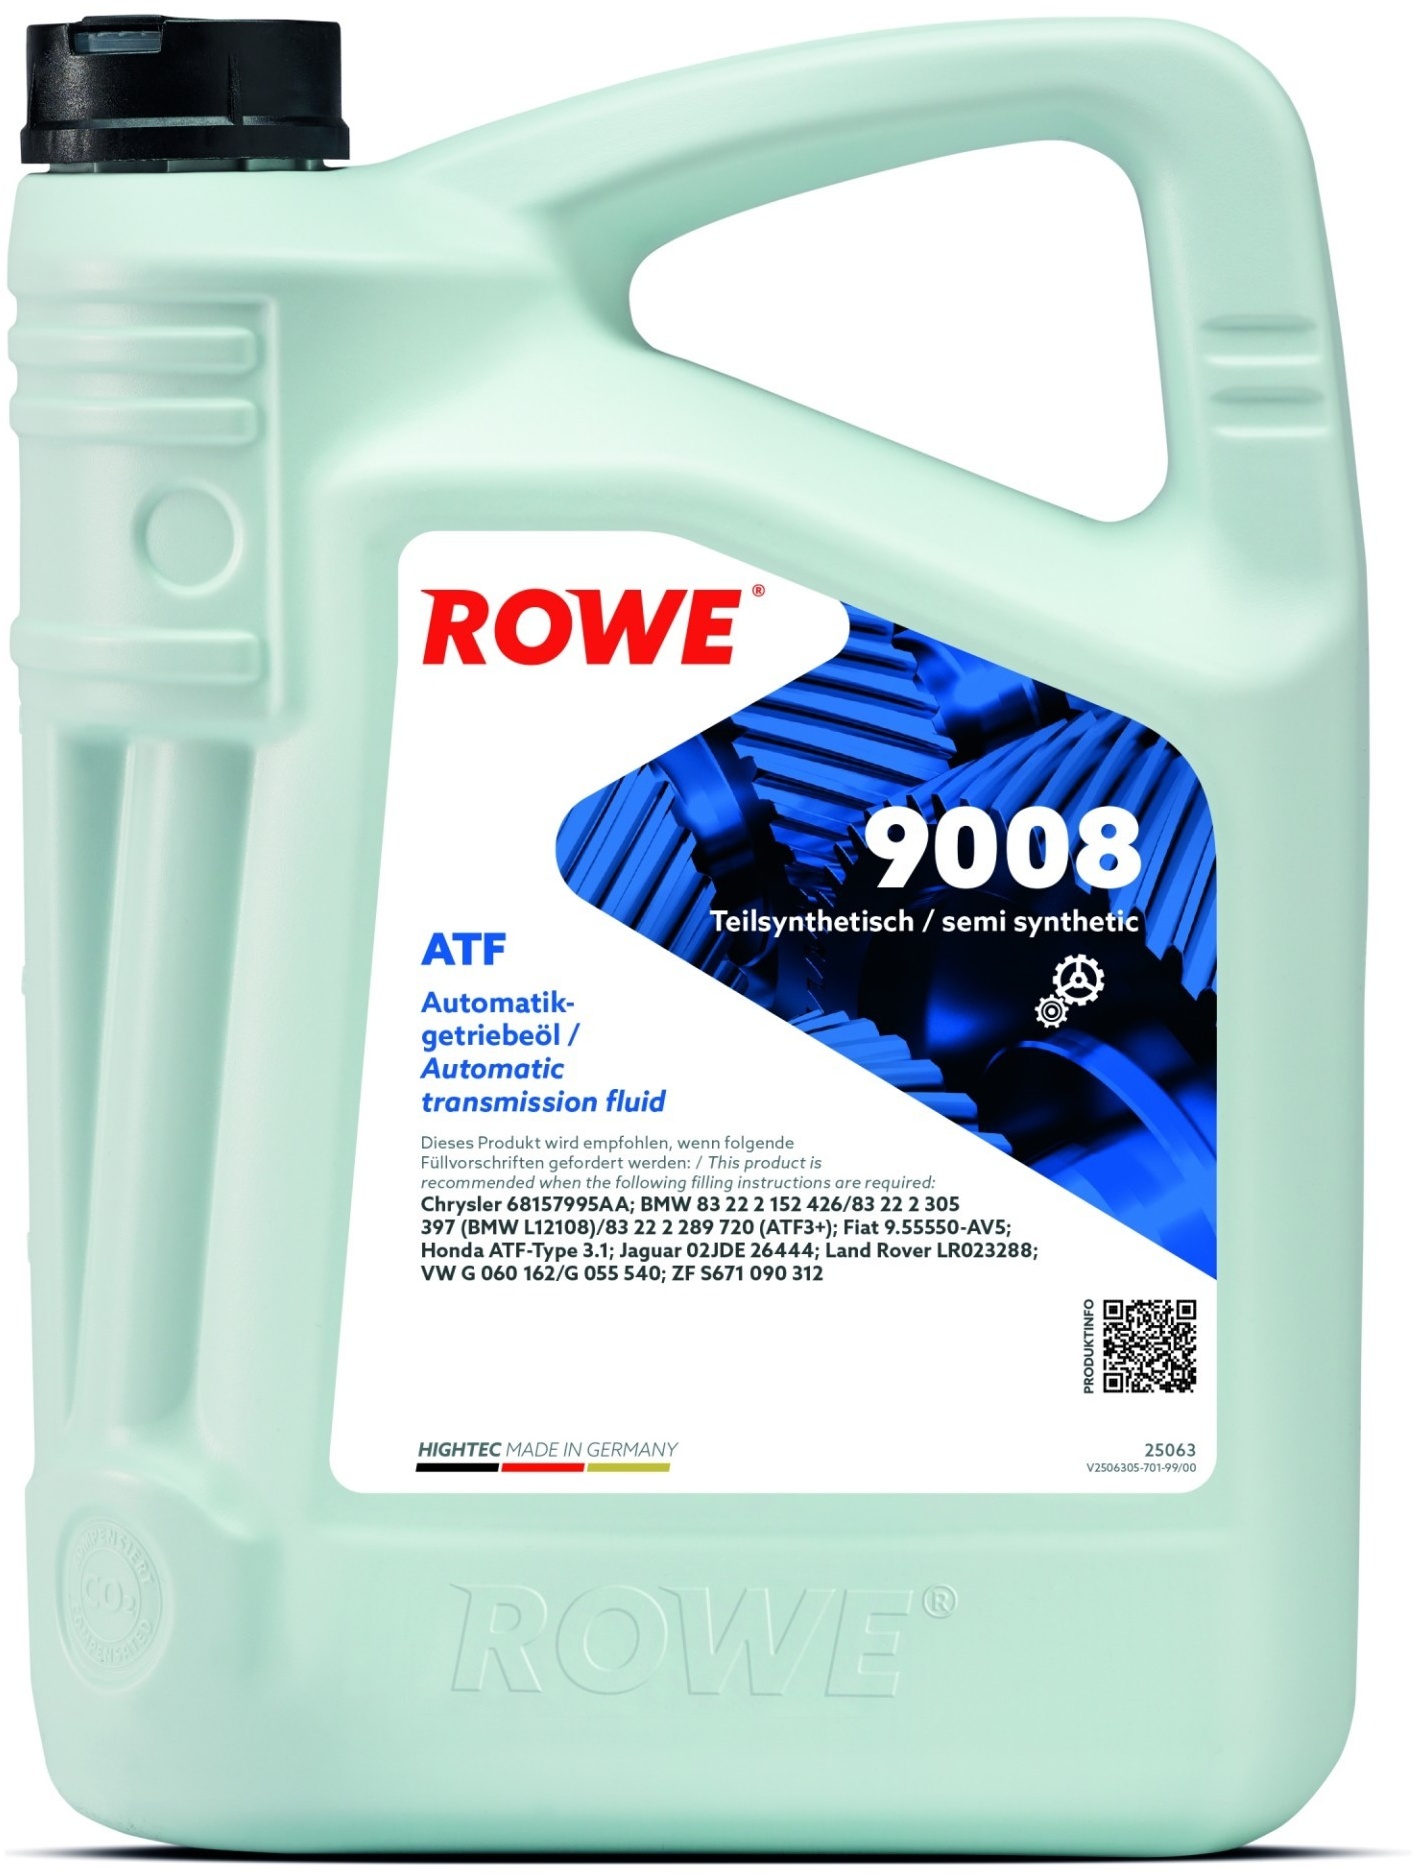 ROWE HIGHTEC ATF 9008 (25063) Teilsynthetiköl 5L (25063-0050-99)